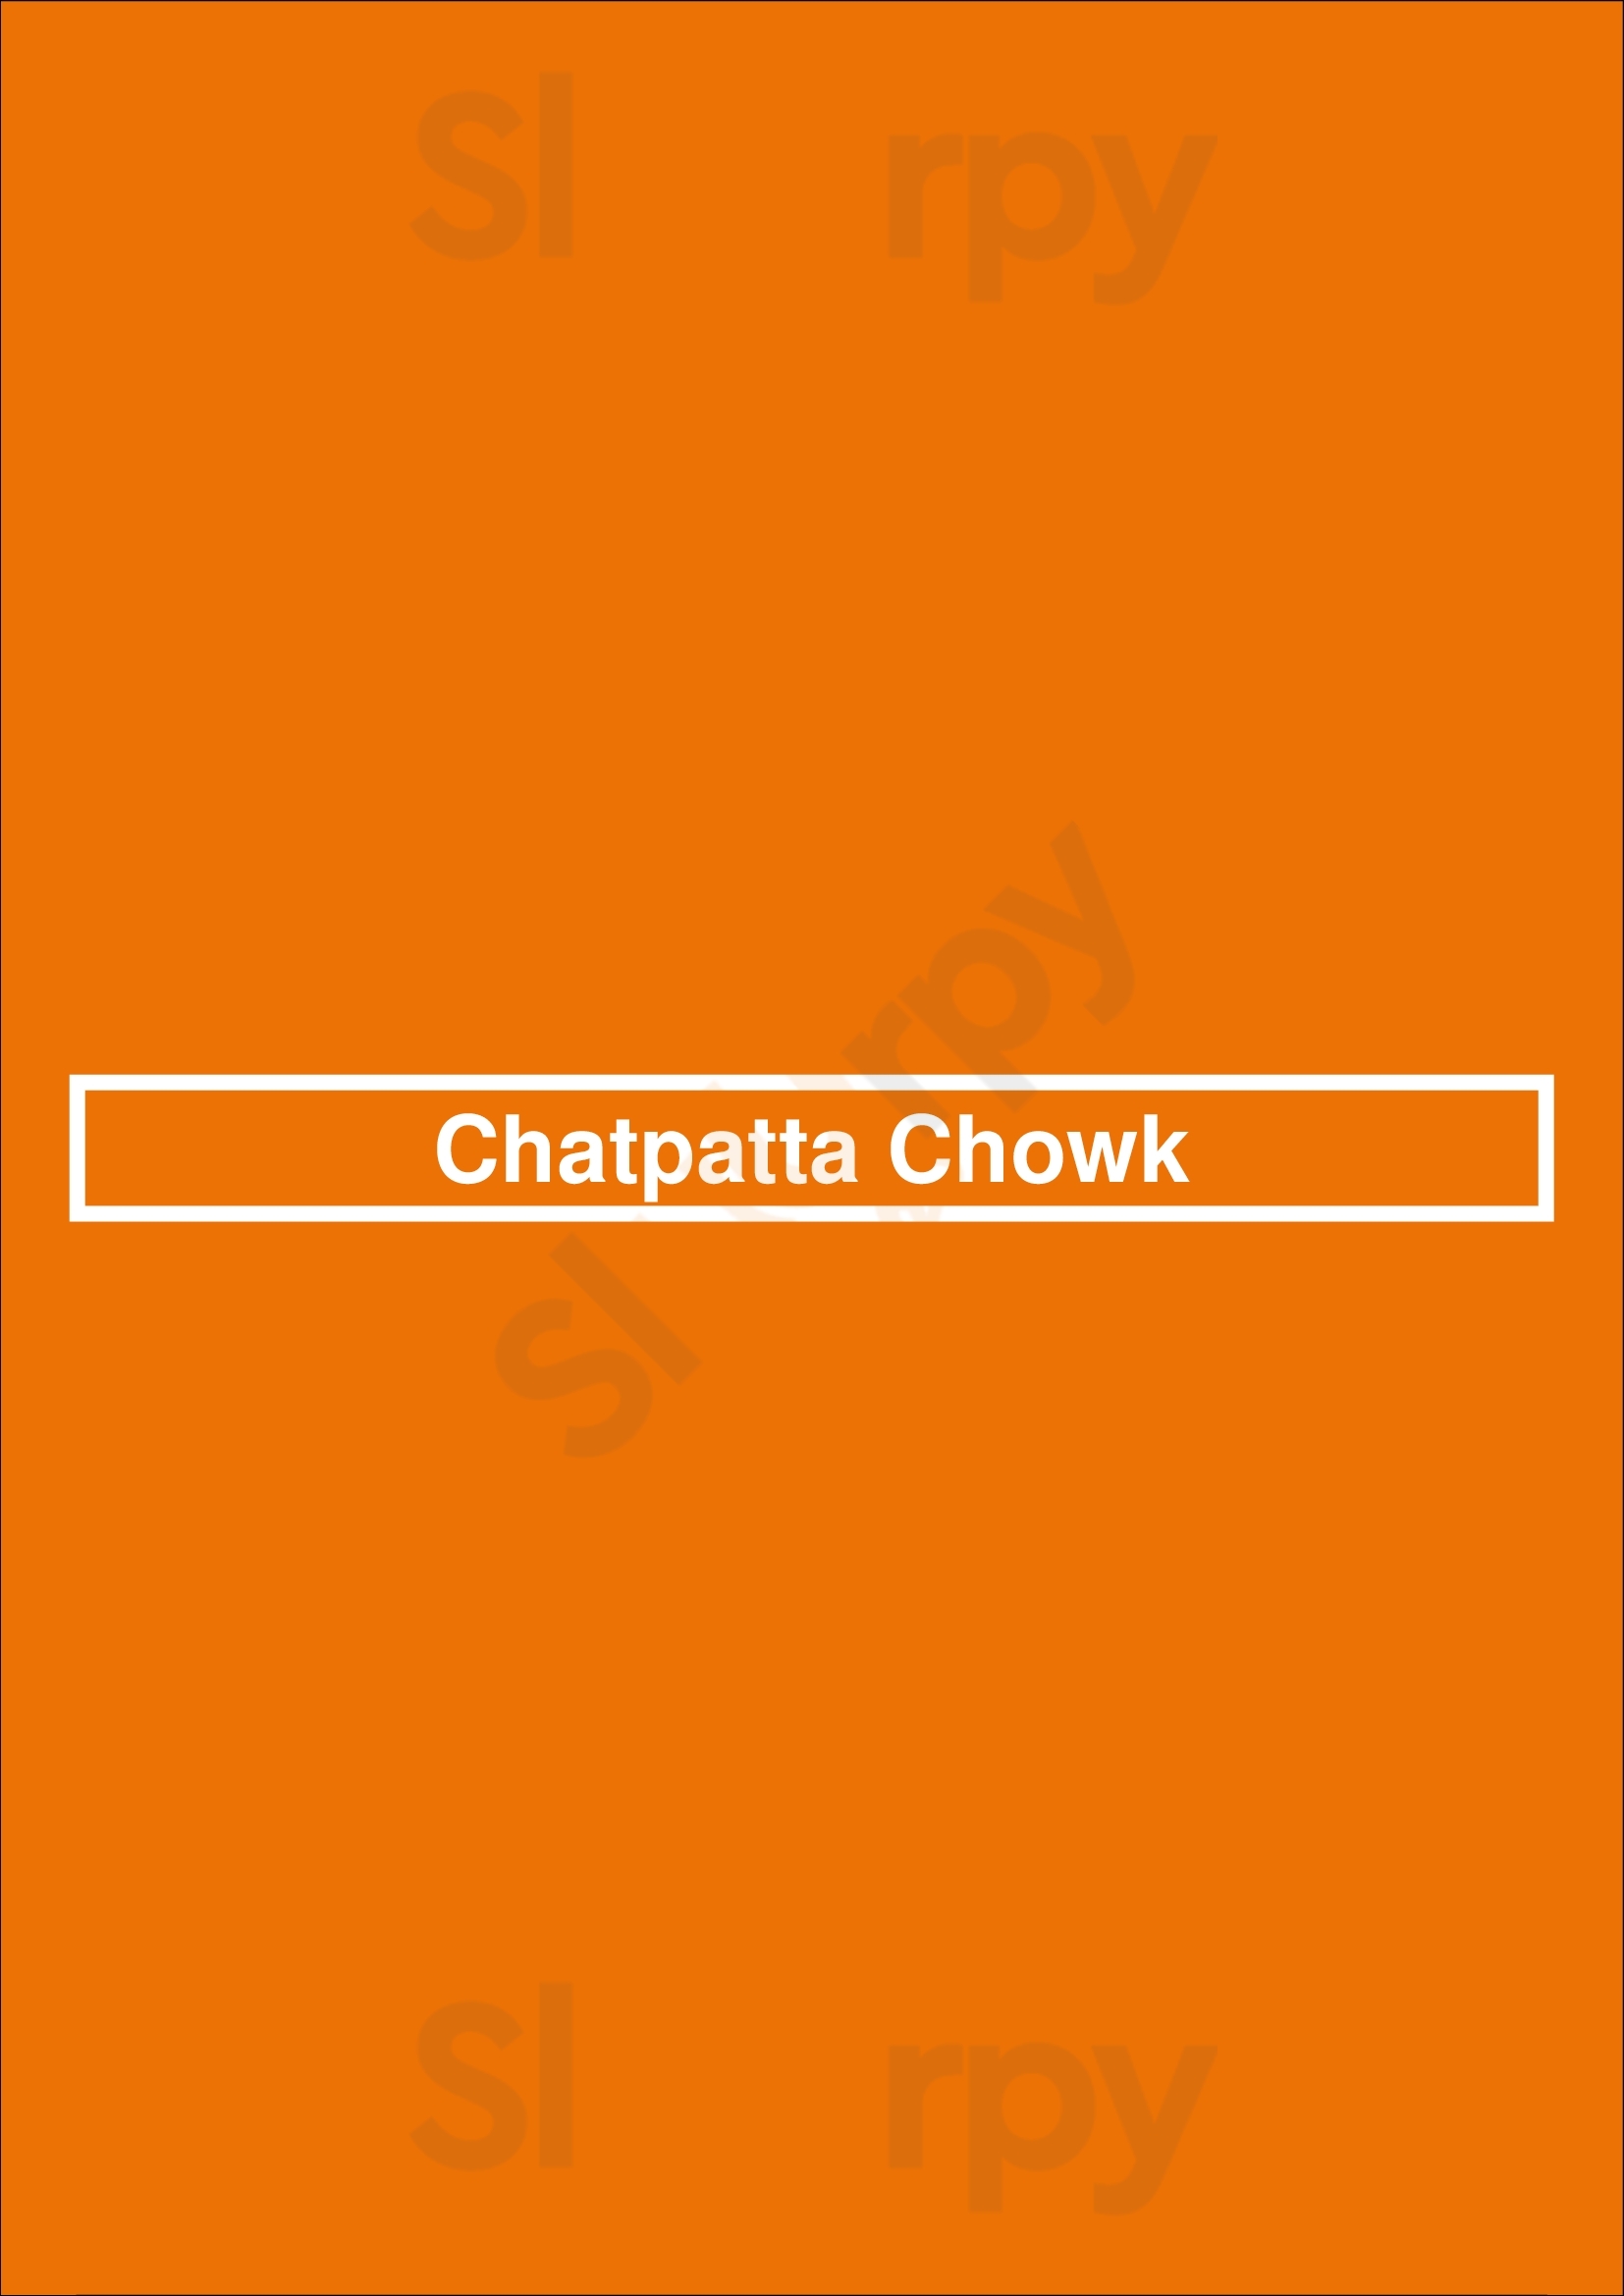 Chatpatta Chowk Mississauga Menu - 1